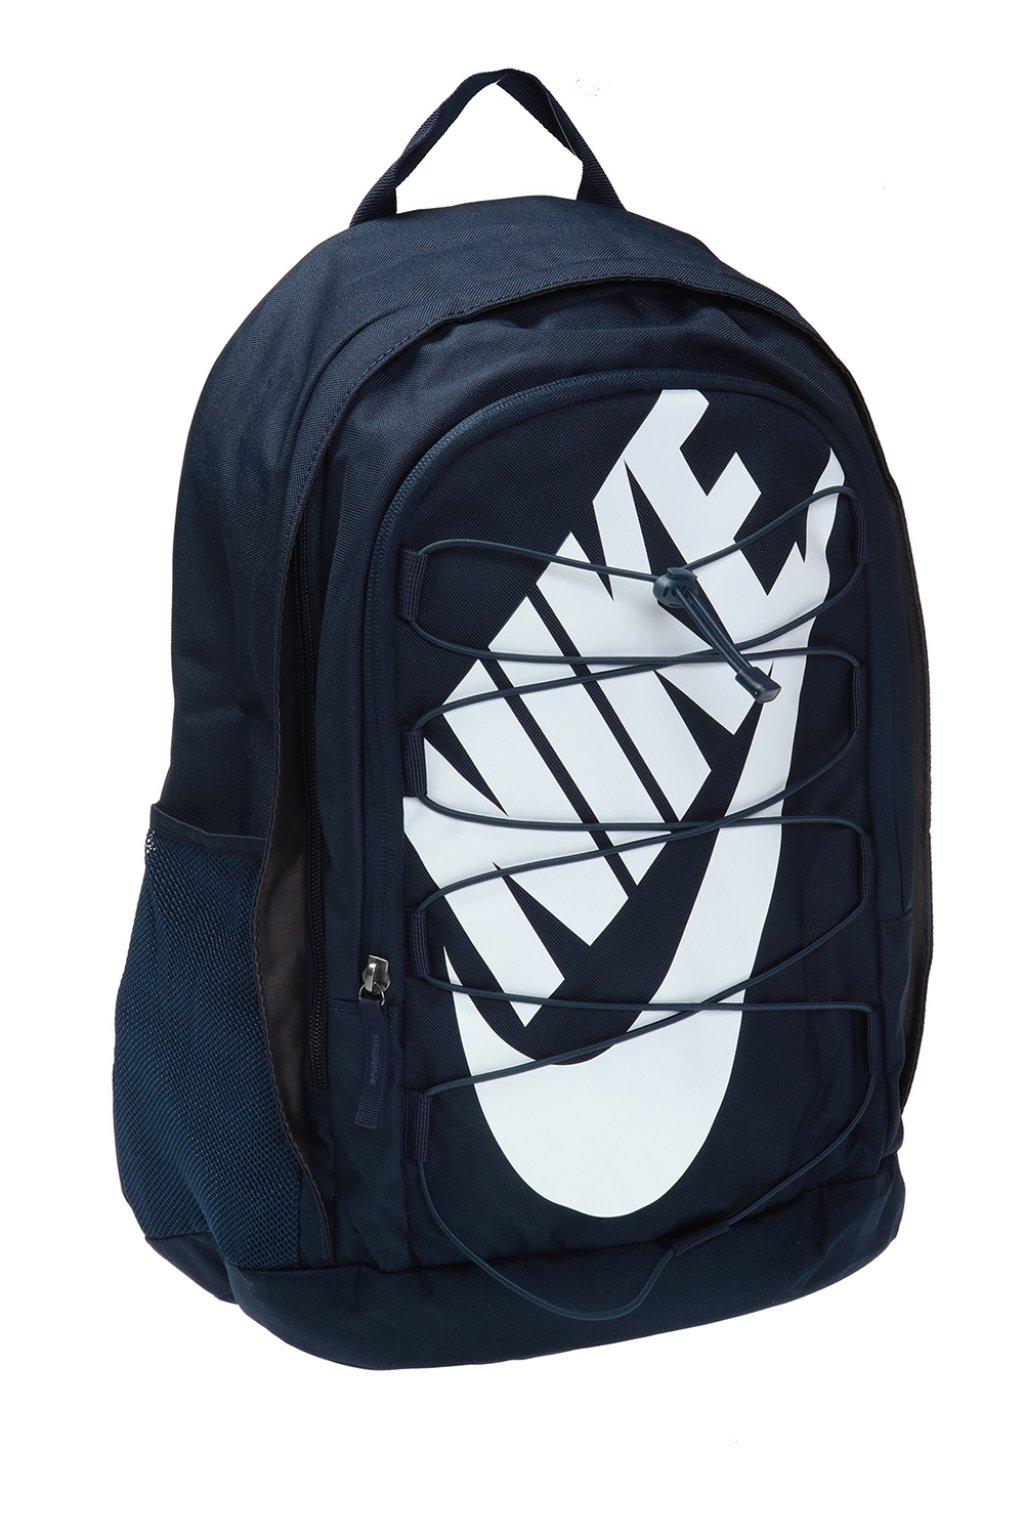 dark blue nike backpack Off 58% - sirinscrochet.com